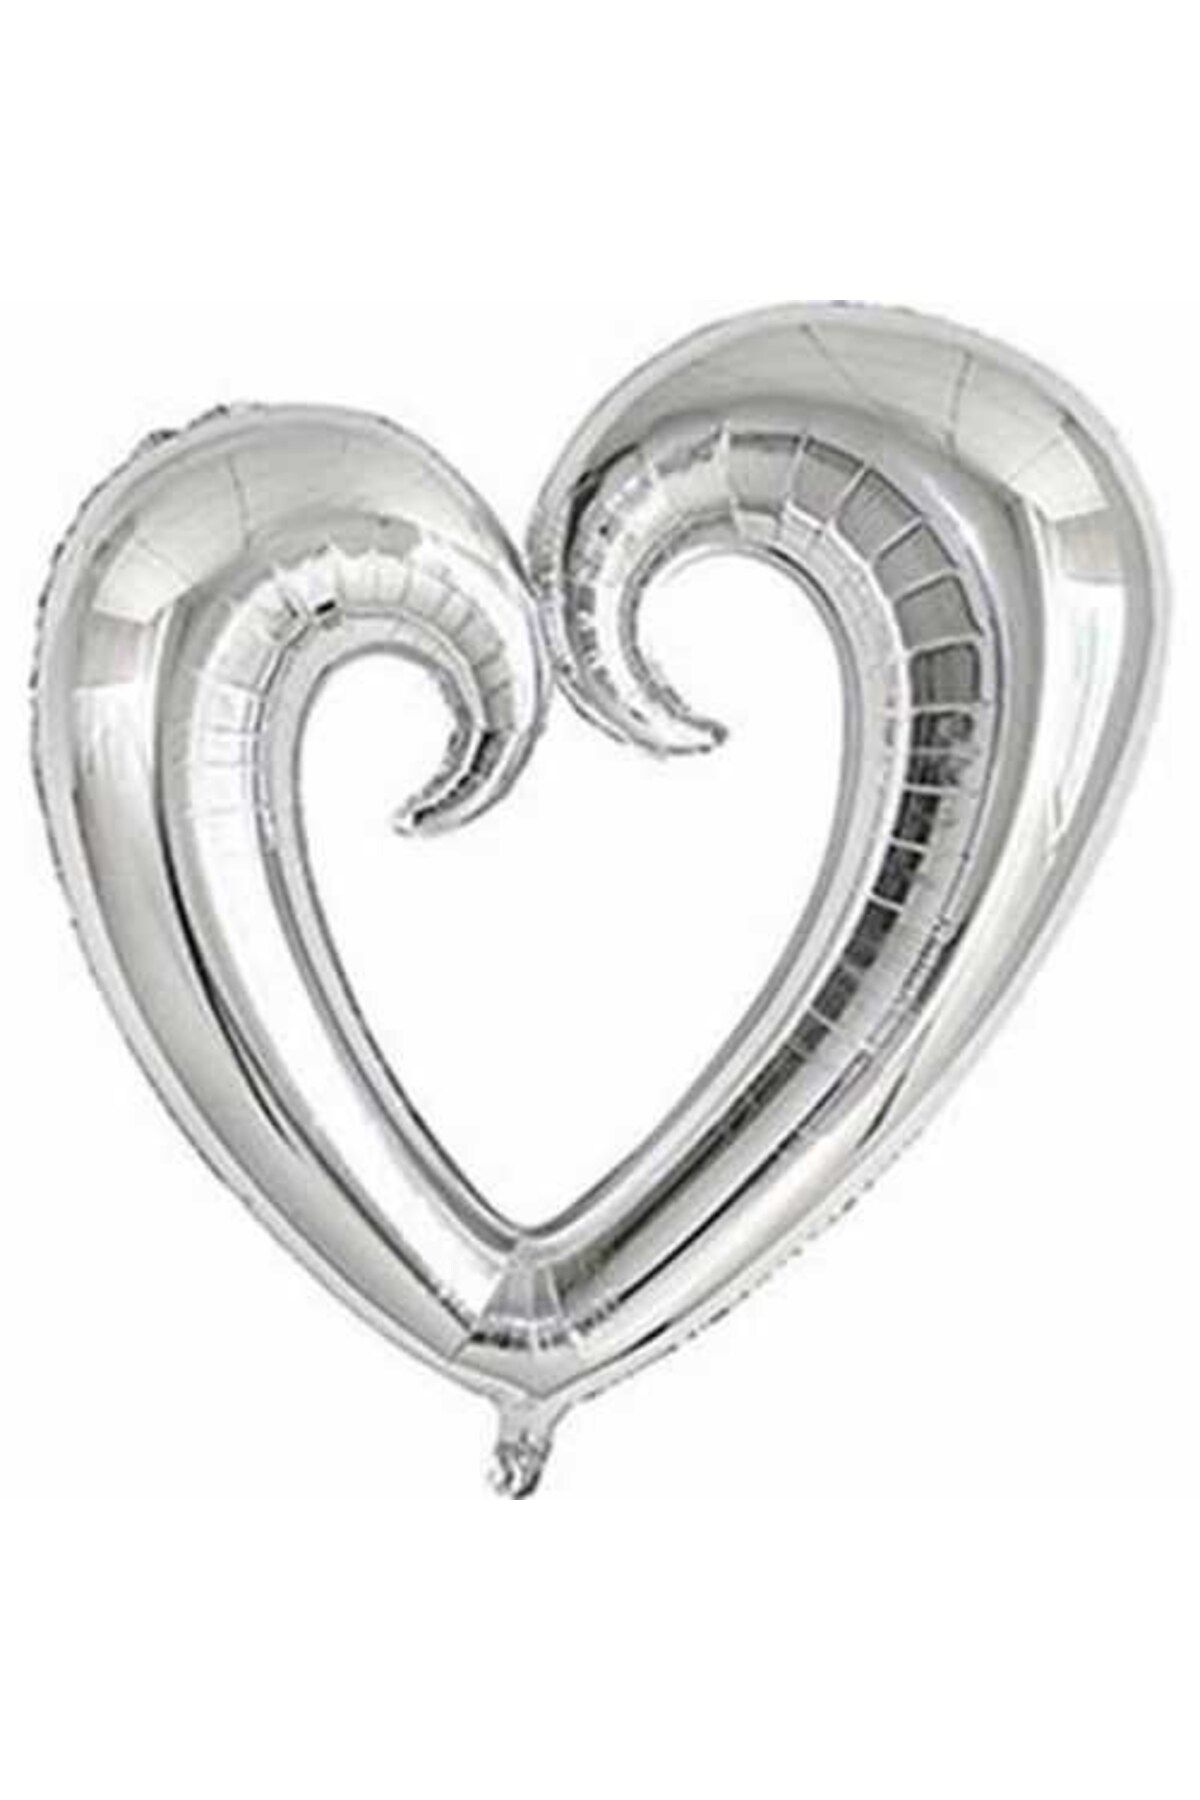 Partioutlet Kalp Balon Folyo İçi Boş Gümüş Renk